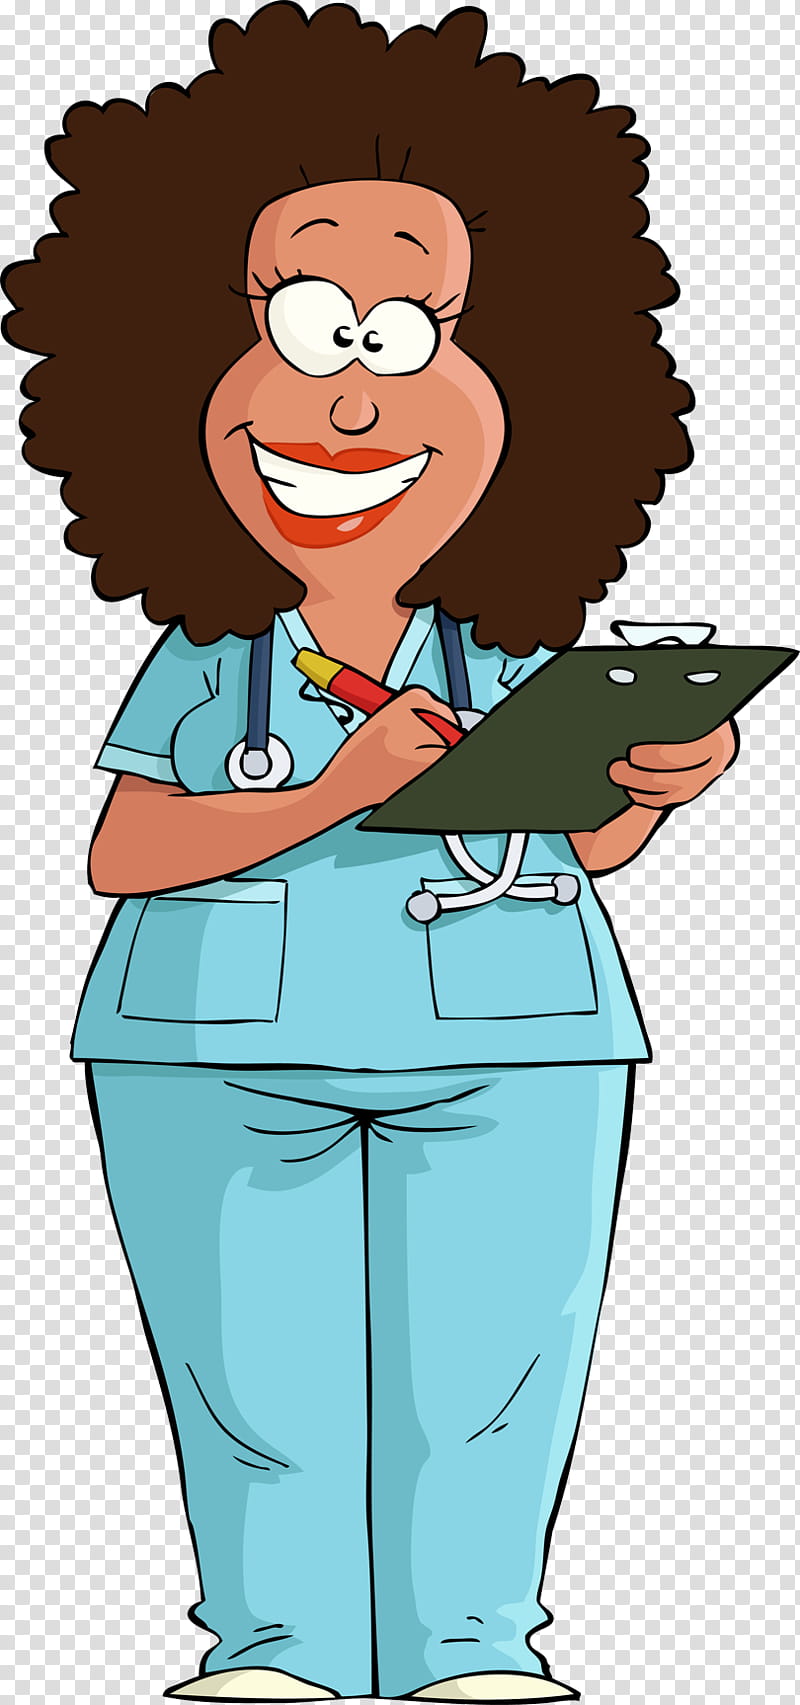 Cute Female Nurse Vector Cartoon Character - 85 Illustrations | GraphicMama